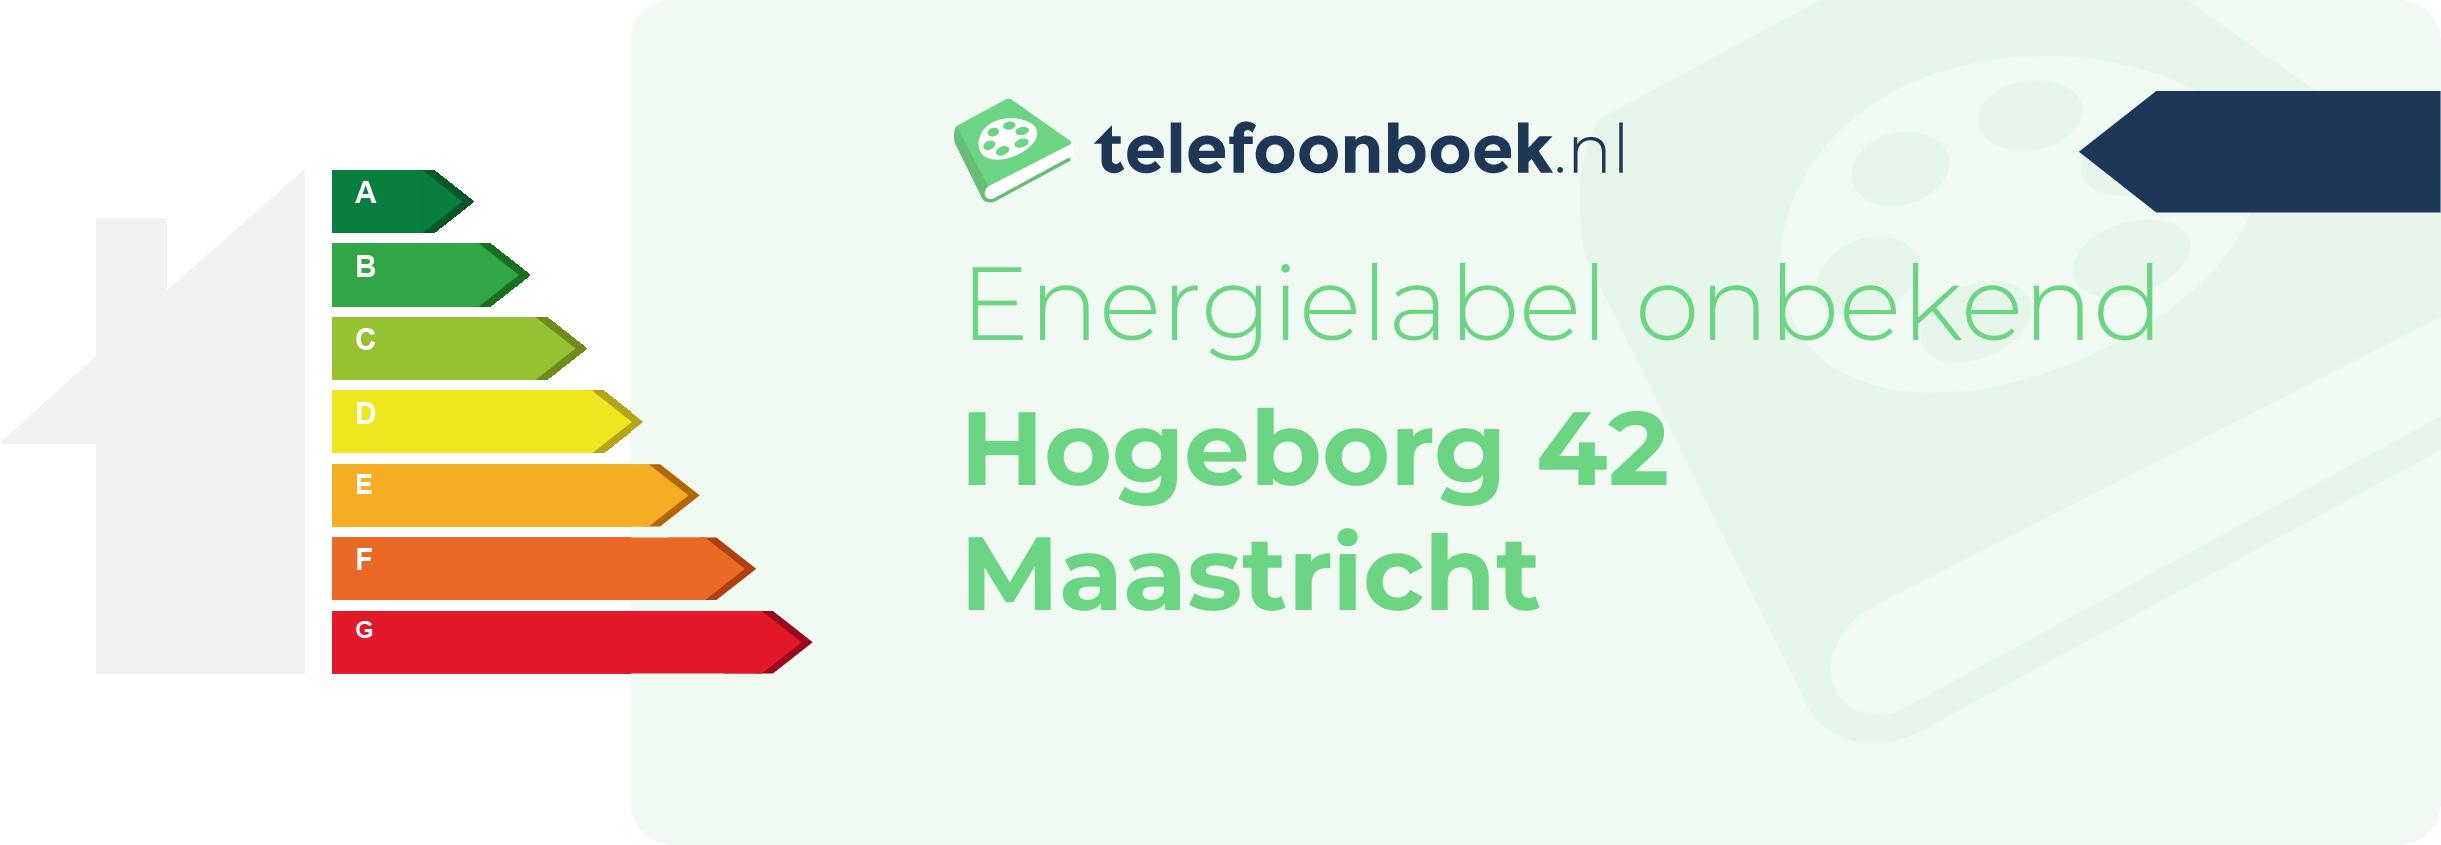 Energielabel Hogeborg 42 Maastricht